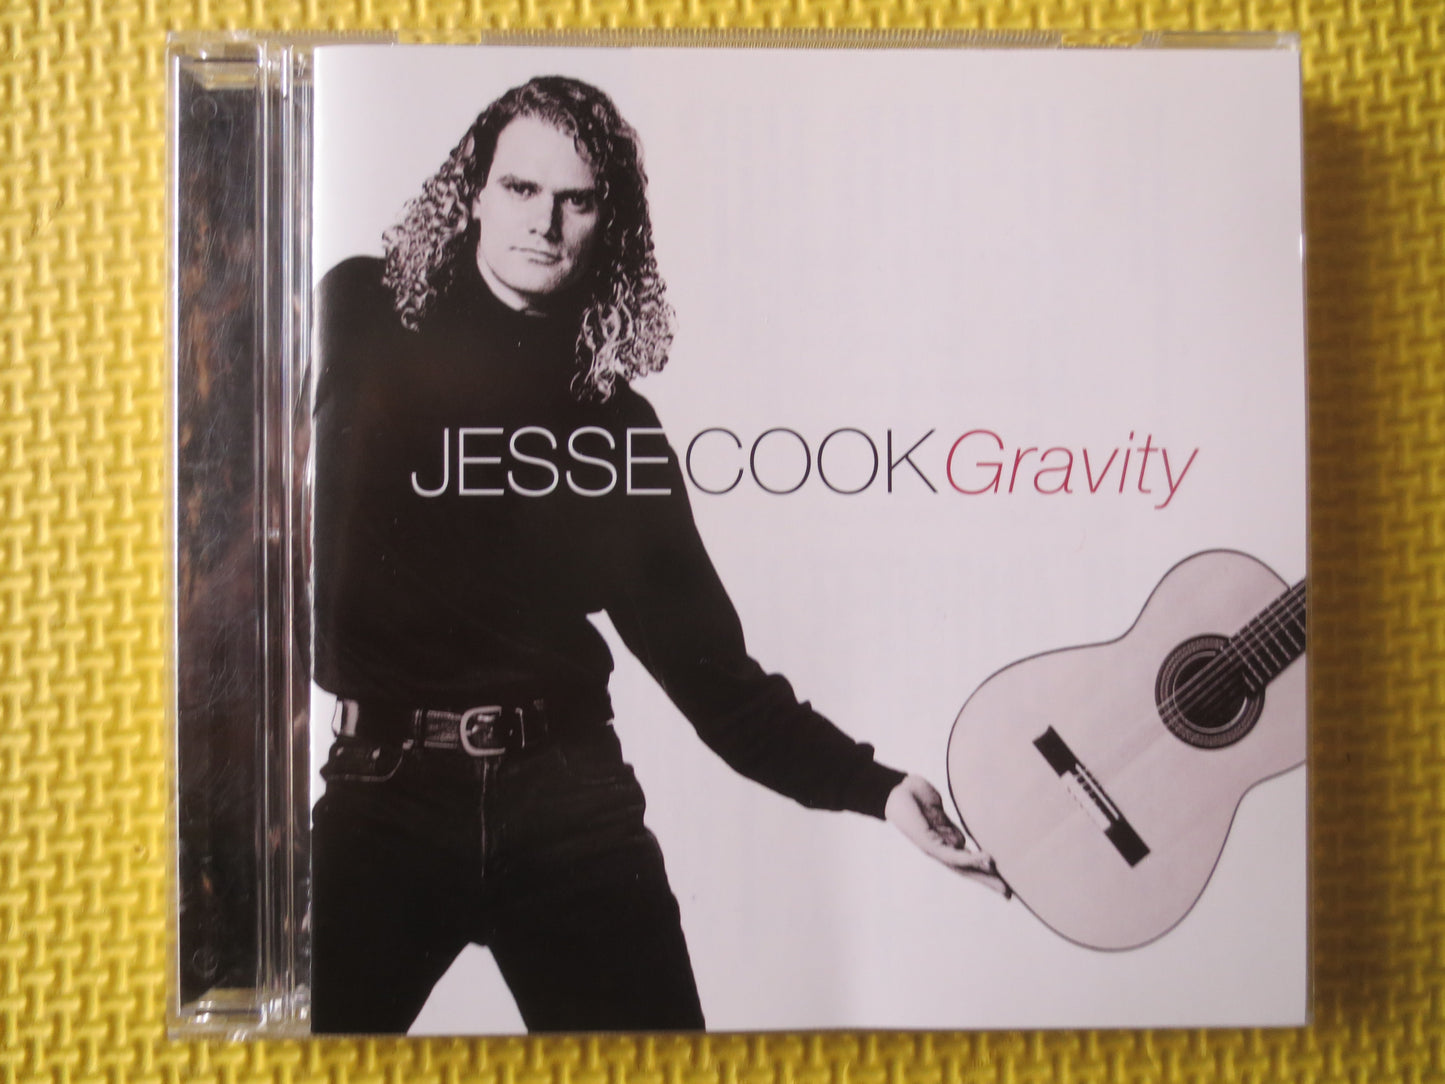 JESSE COOK, GRAVITY, Jesse Cook Cd, Jesse Cook Albums, Jesse Cook Music, Jesse Cook Songs, Flamenco Guitar, 1996 Compact Discs